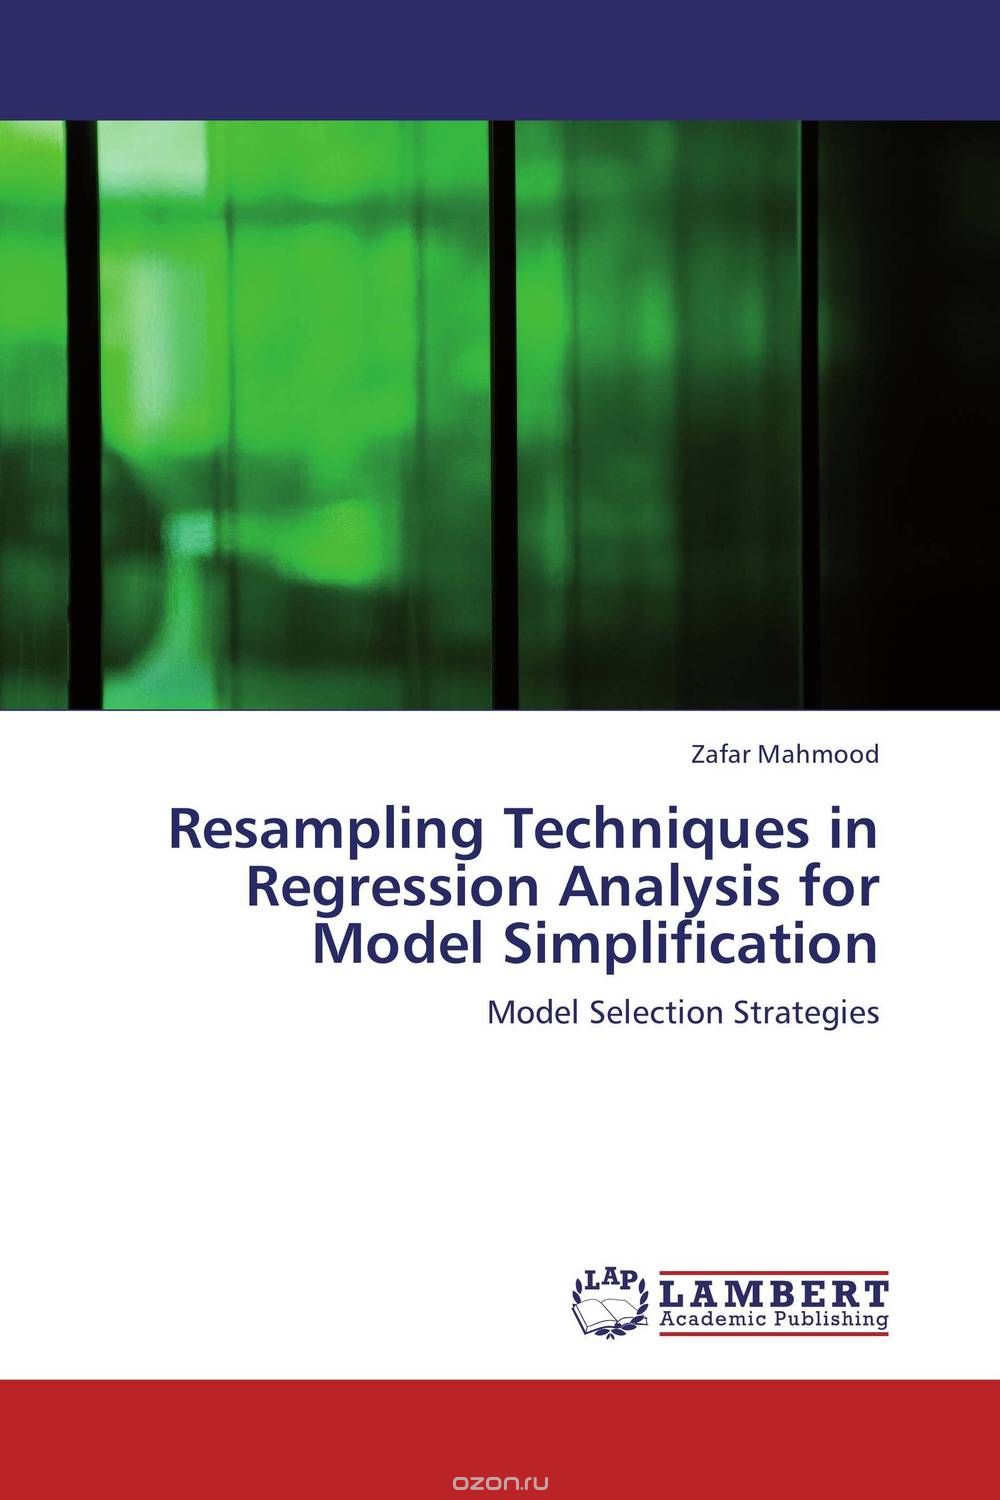 Скачать книгу "Resampling Techniques in Regression Analysis for Model Simplification"